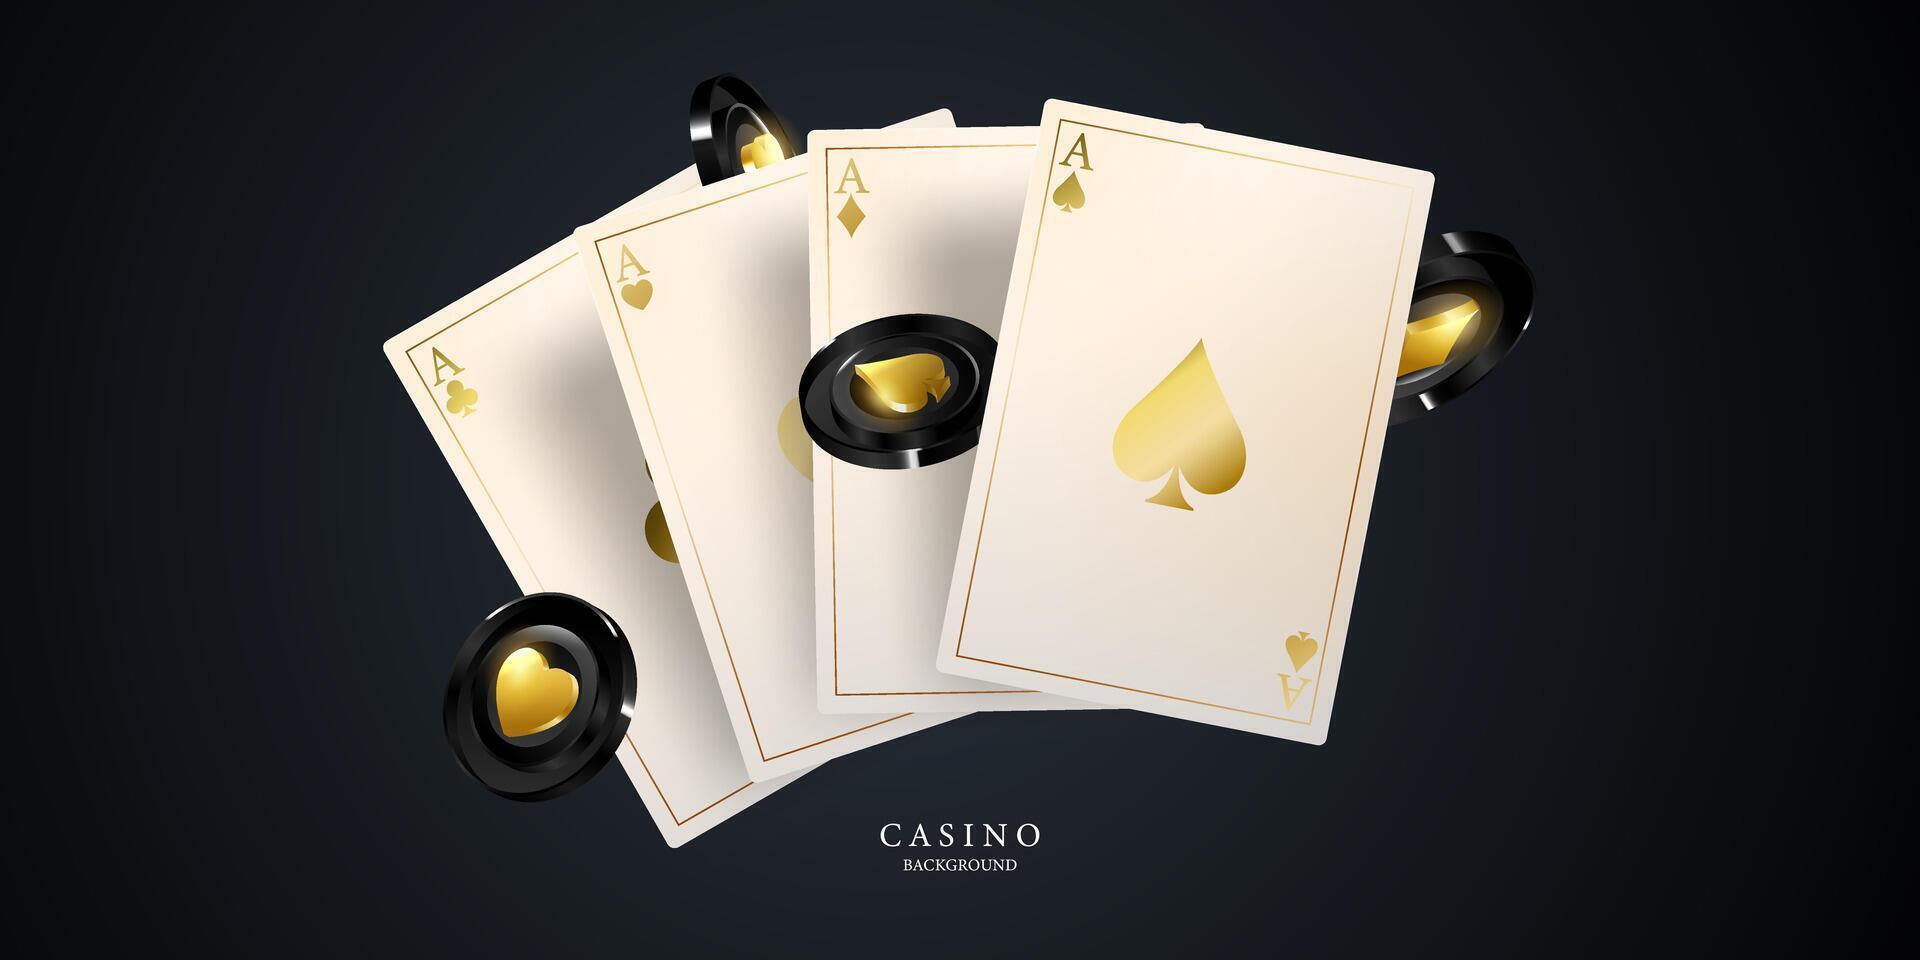 Play Cards Win Poker Hand Casino Chips Flying Real Tokens For Gambling Cash for roulette or poker vector illustration